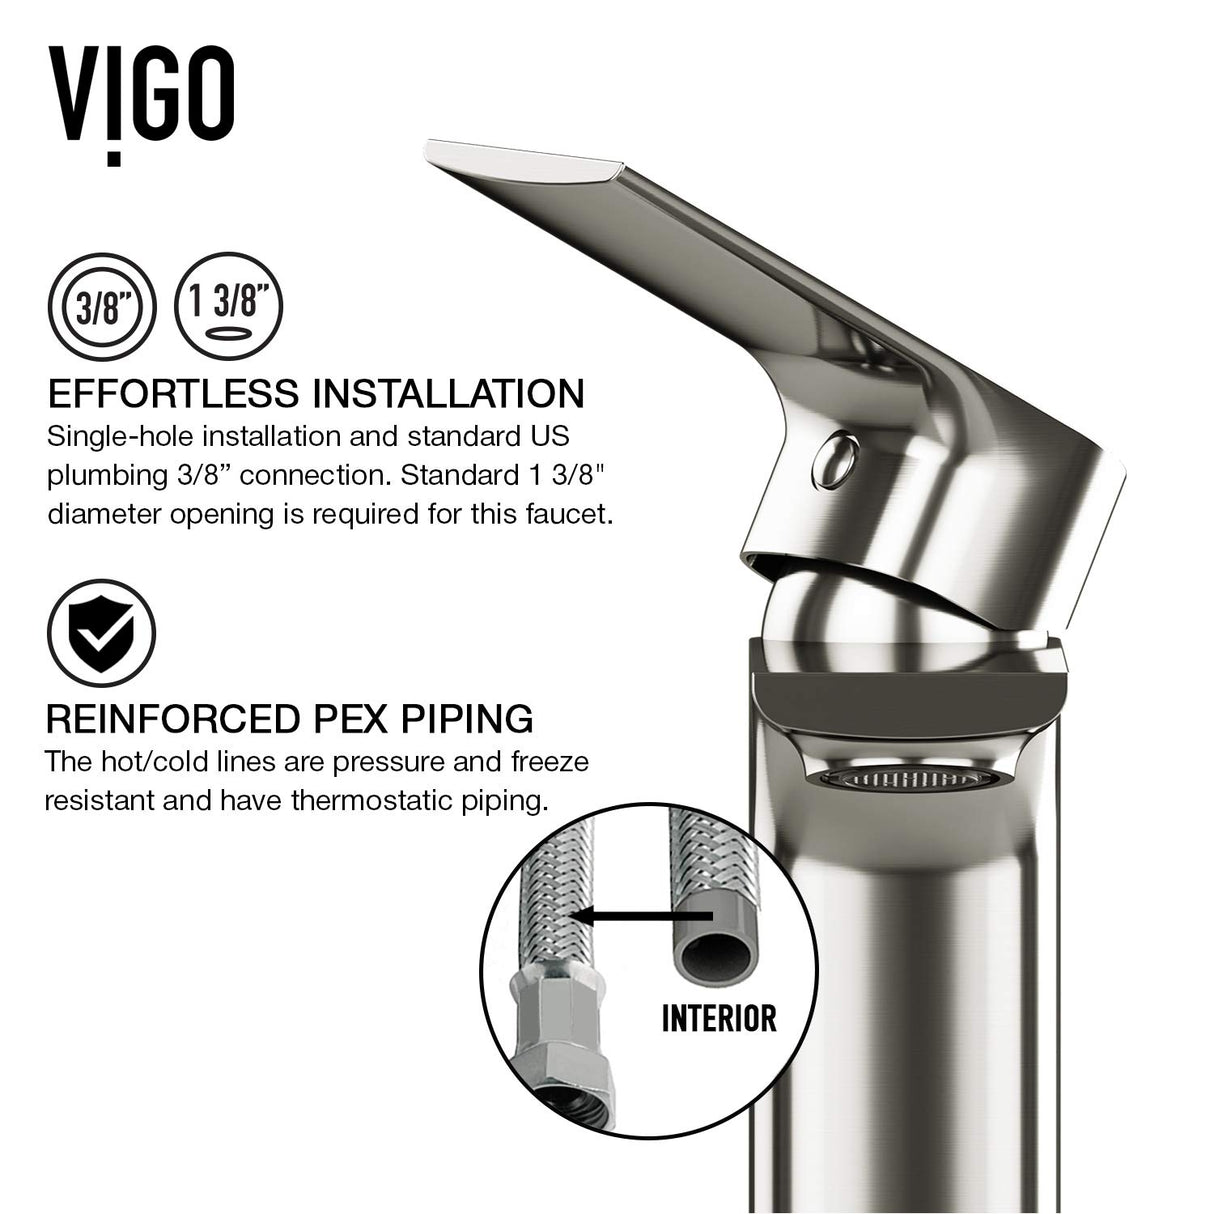 VIGO Davidson 6.75 inch H Single Handle Single Hole Bathroom Sink Faucet in Brushed Nickel - Bathroom Sink Faucet with Deck Plate VG01043BNK1